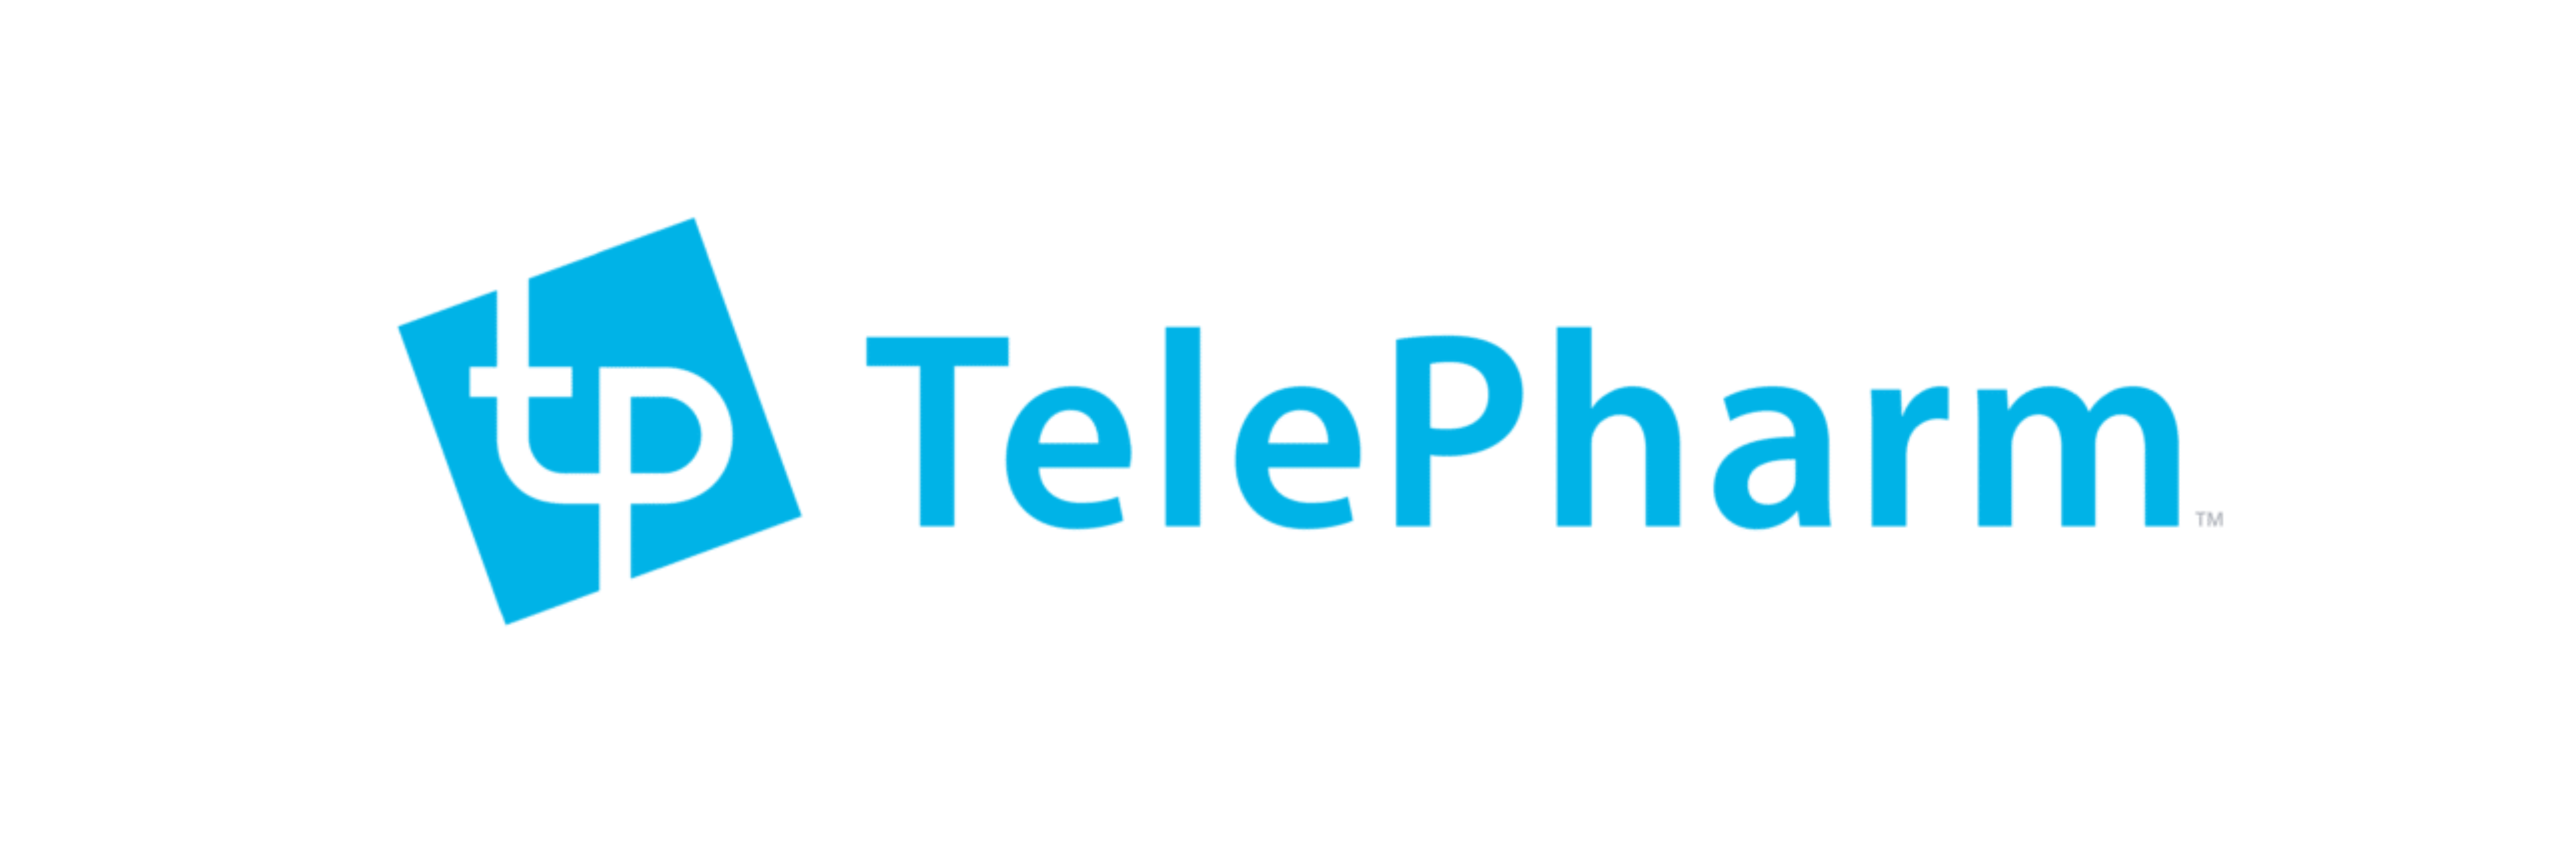 TelePharm Blue logo